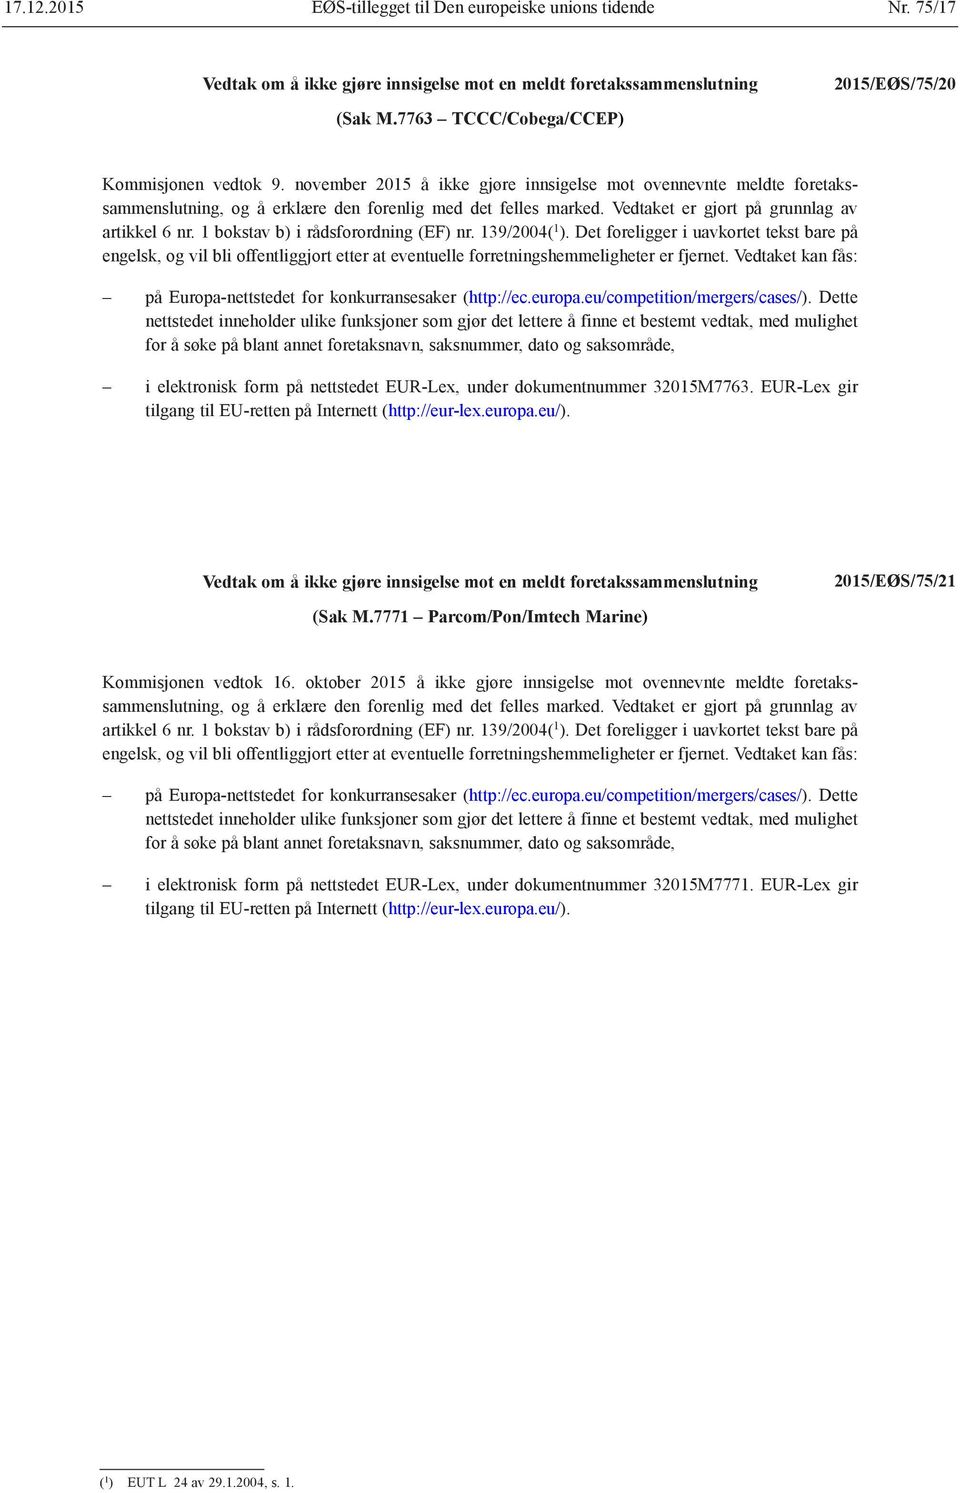 32015M7763. EUR-Lex gir 2015/EØS/75/21 (Sak M.7771 Parcom/Pon/Imtech Marine) Kommisjonen vedtok 16.